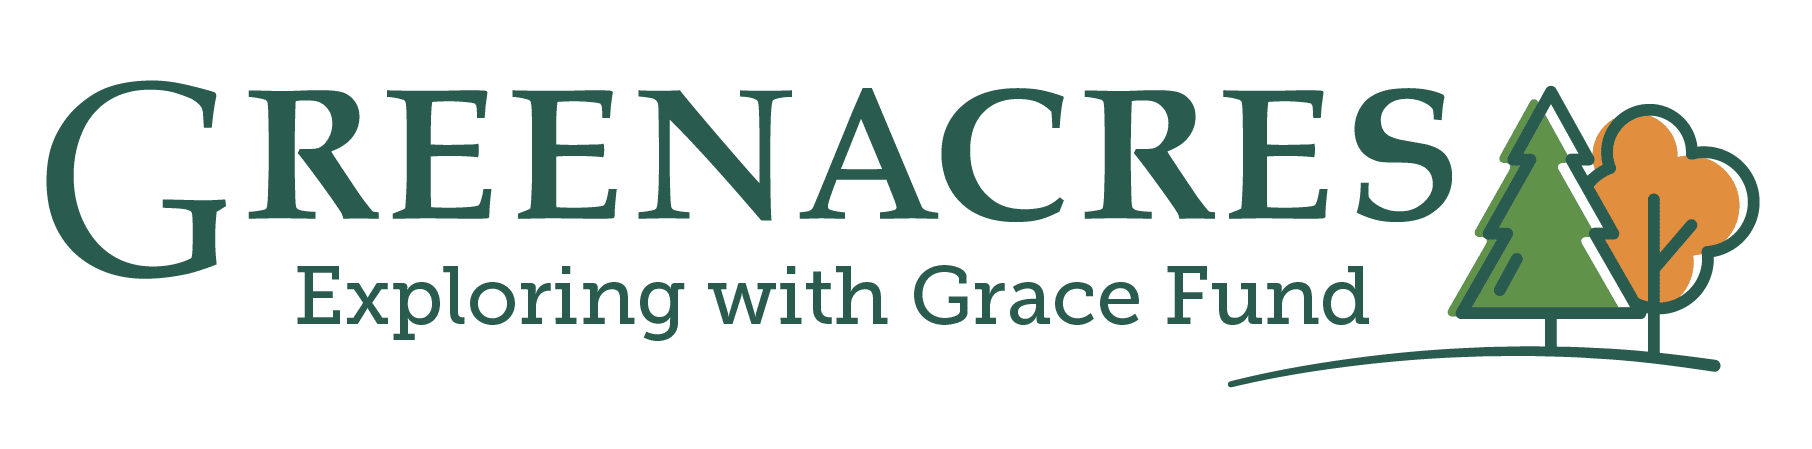 Greenacres Exploring with Grace logo